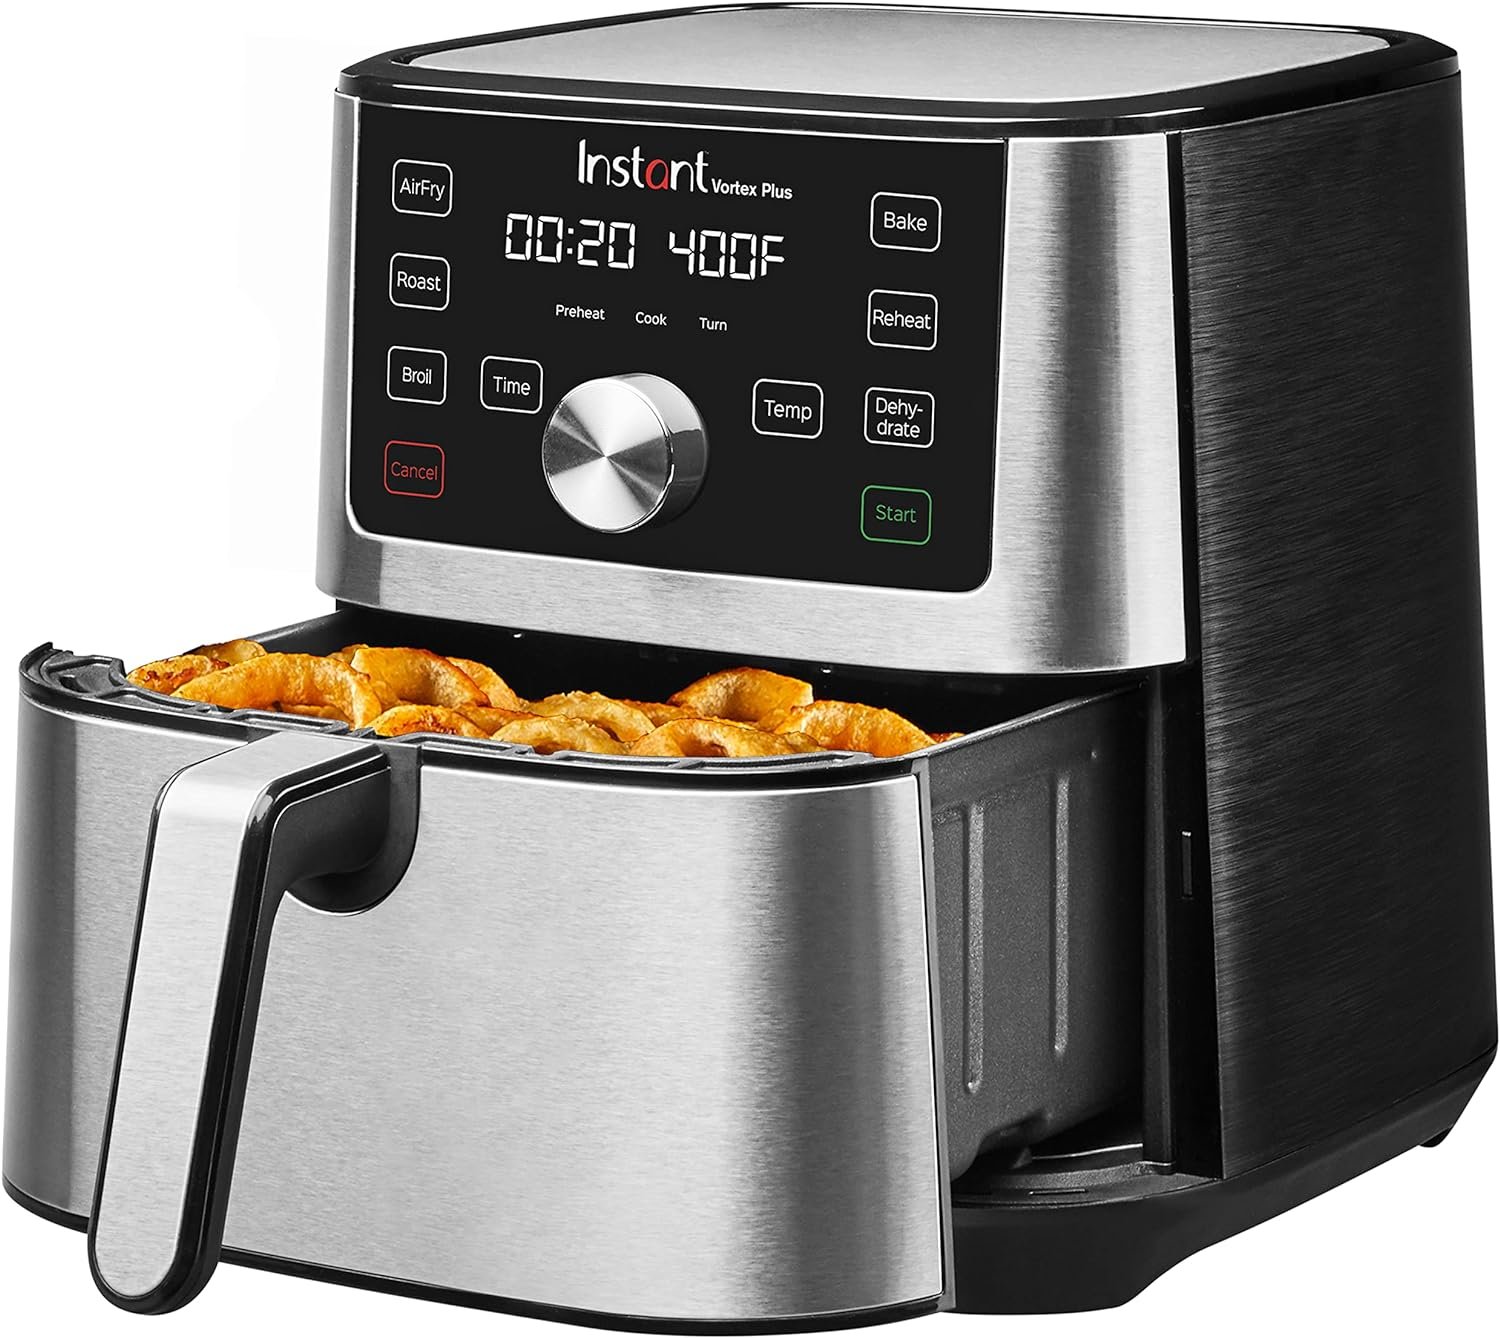 Instant Pot Air Fryer Oven Review